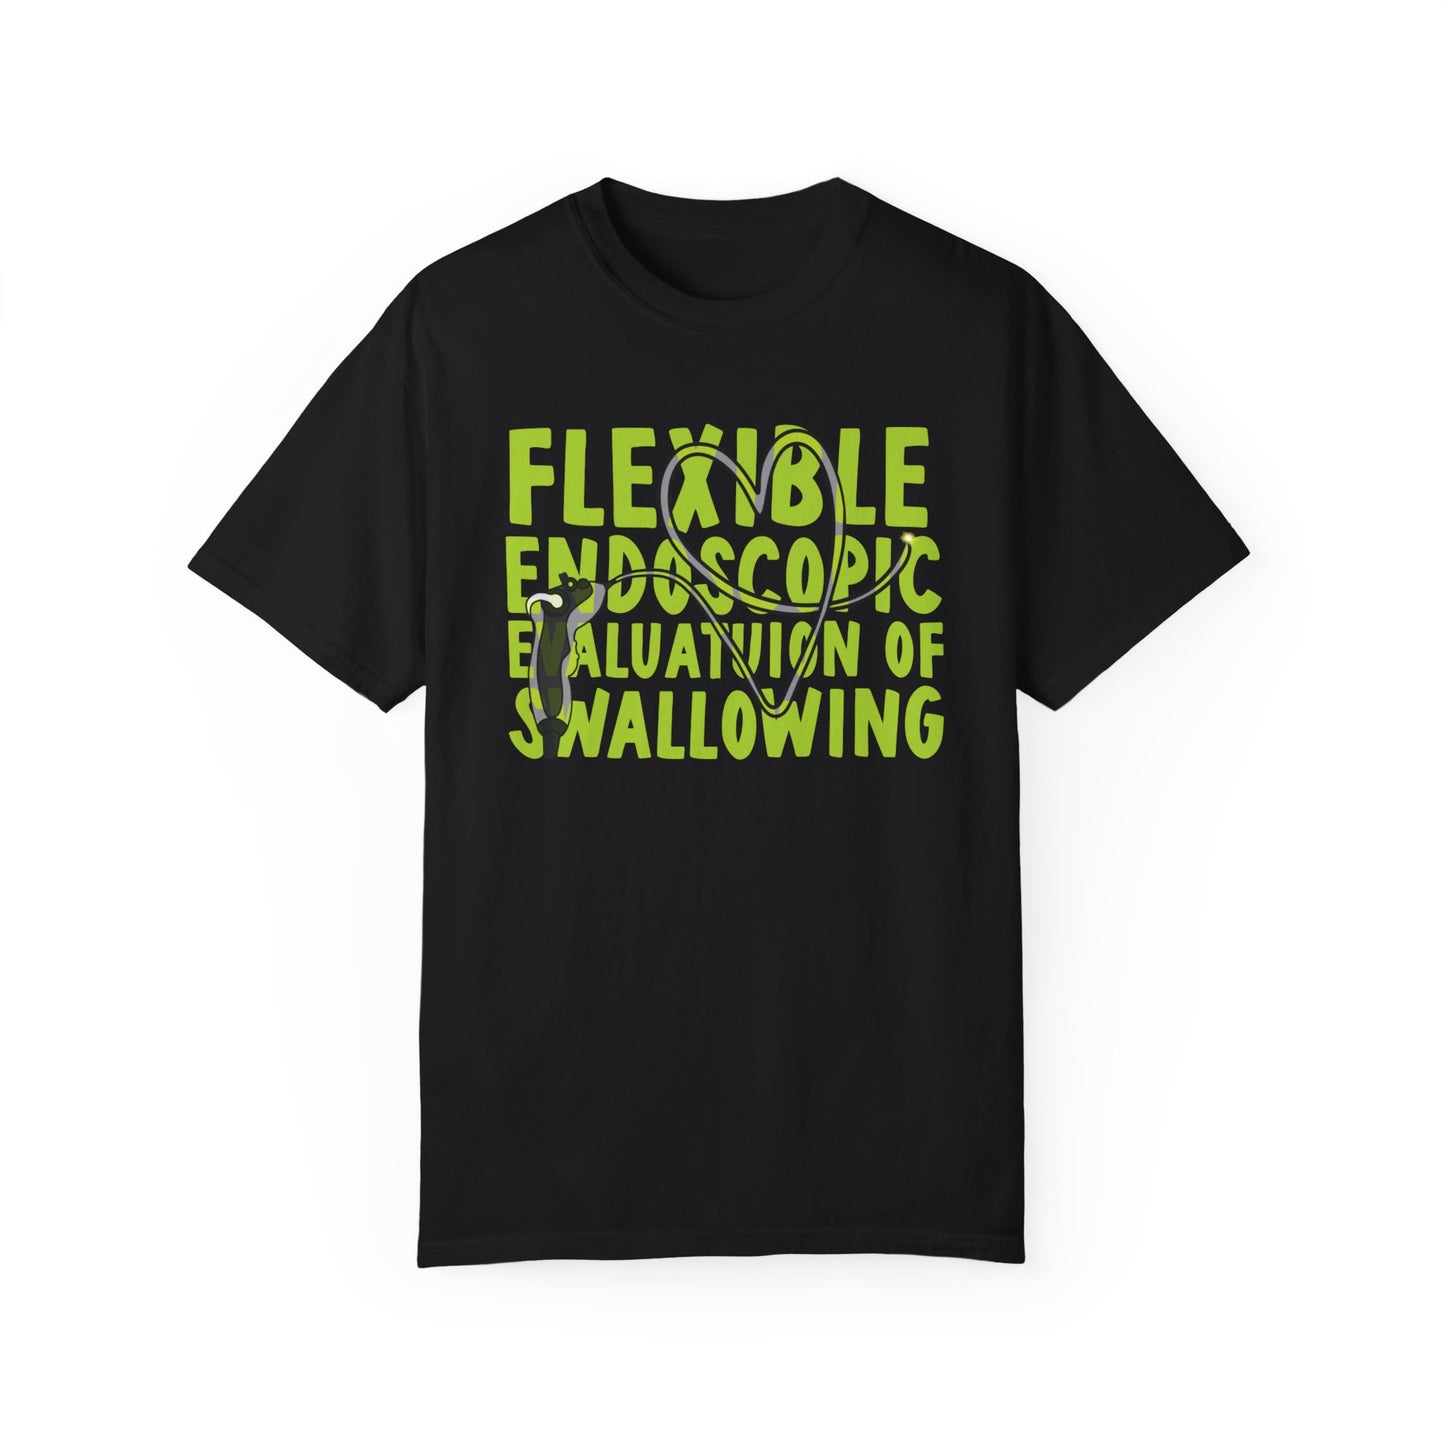 Flexible Endoscopic Evaluation of Swallowing Tee